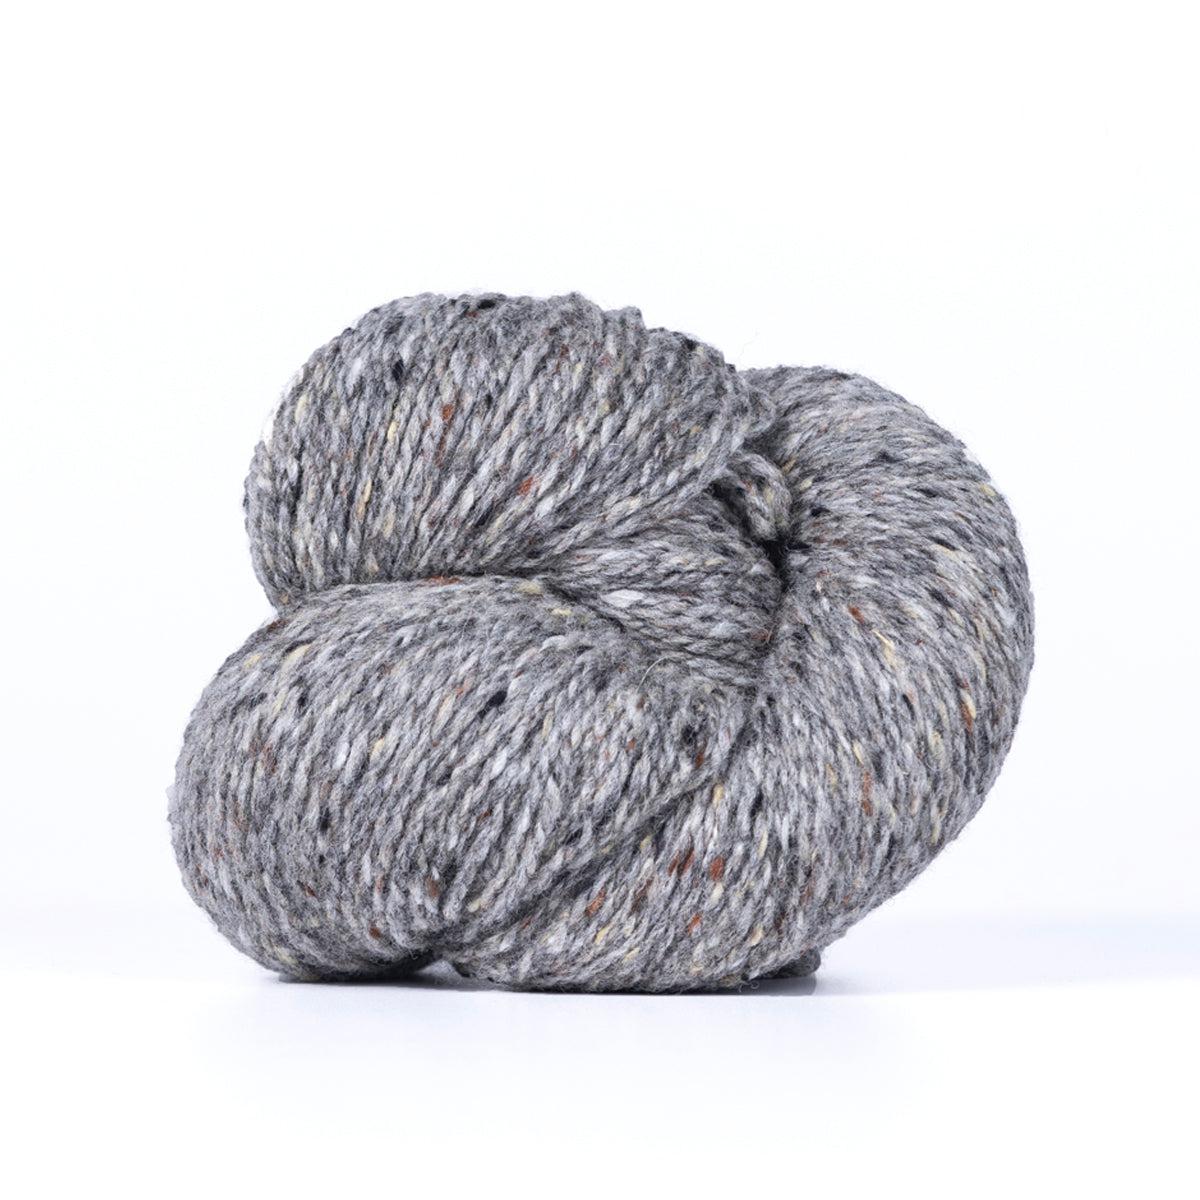 A skein of Kelbourne Woolens Lucky Tweed Med. Grey, a medium grey with lighter and darker grey flecks.